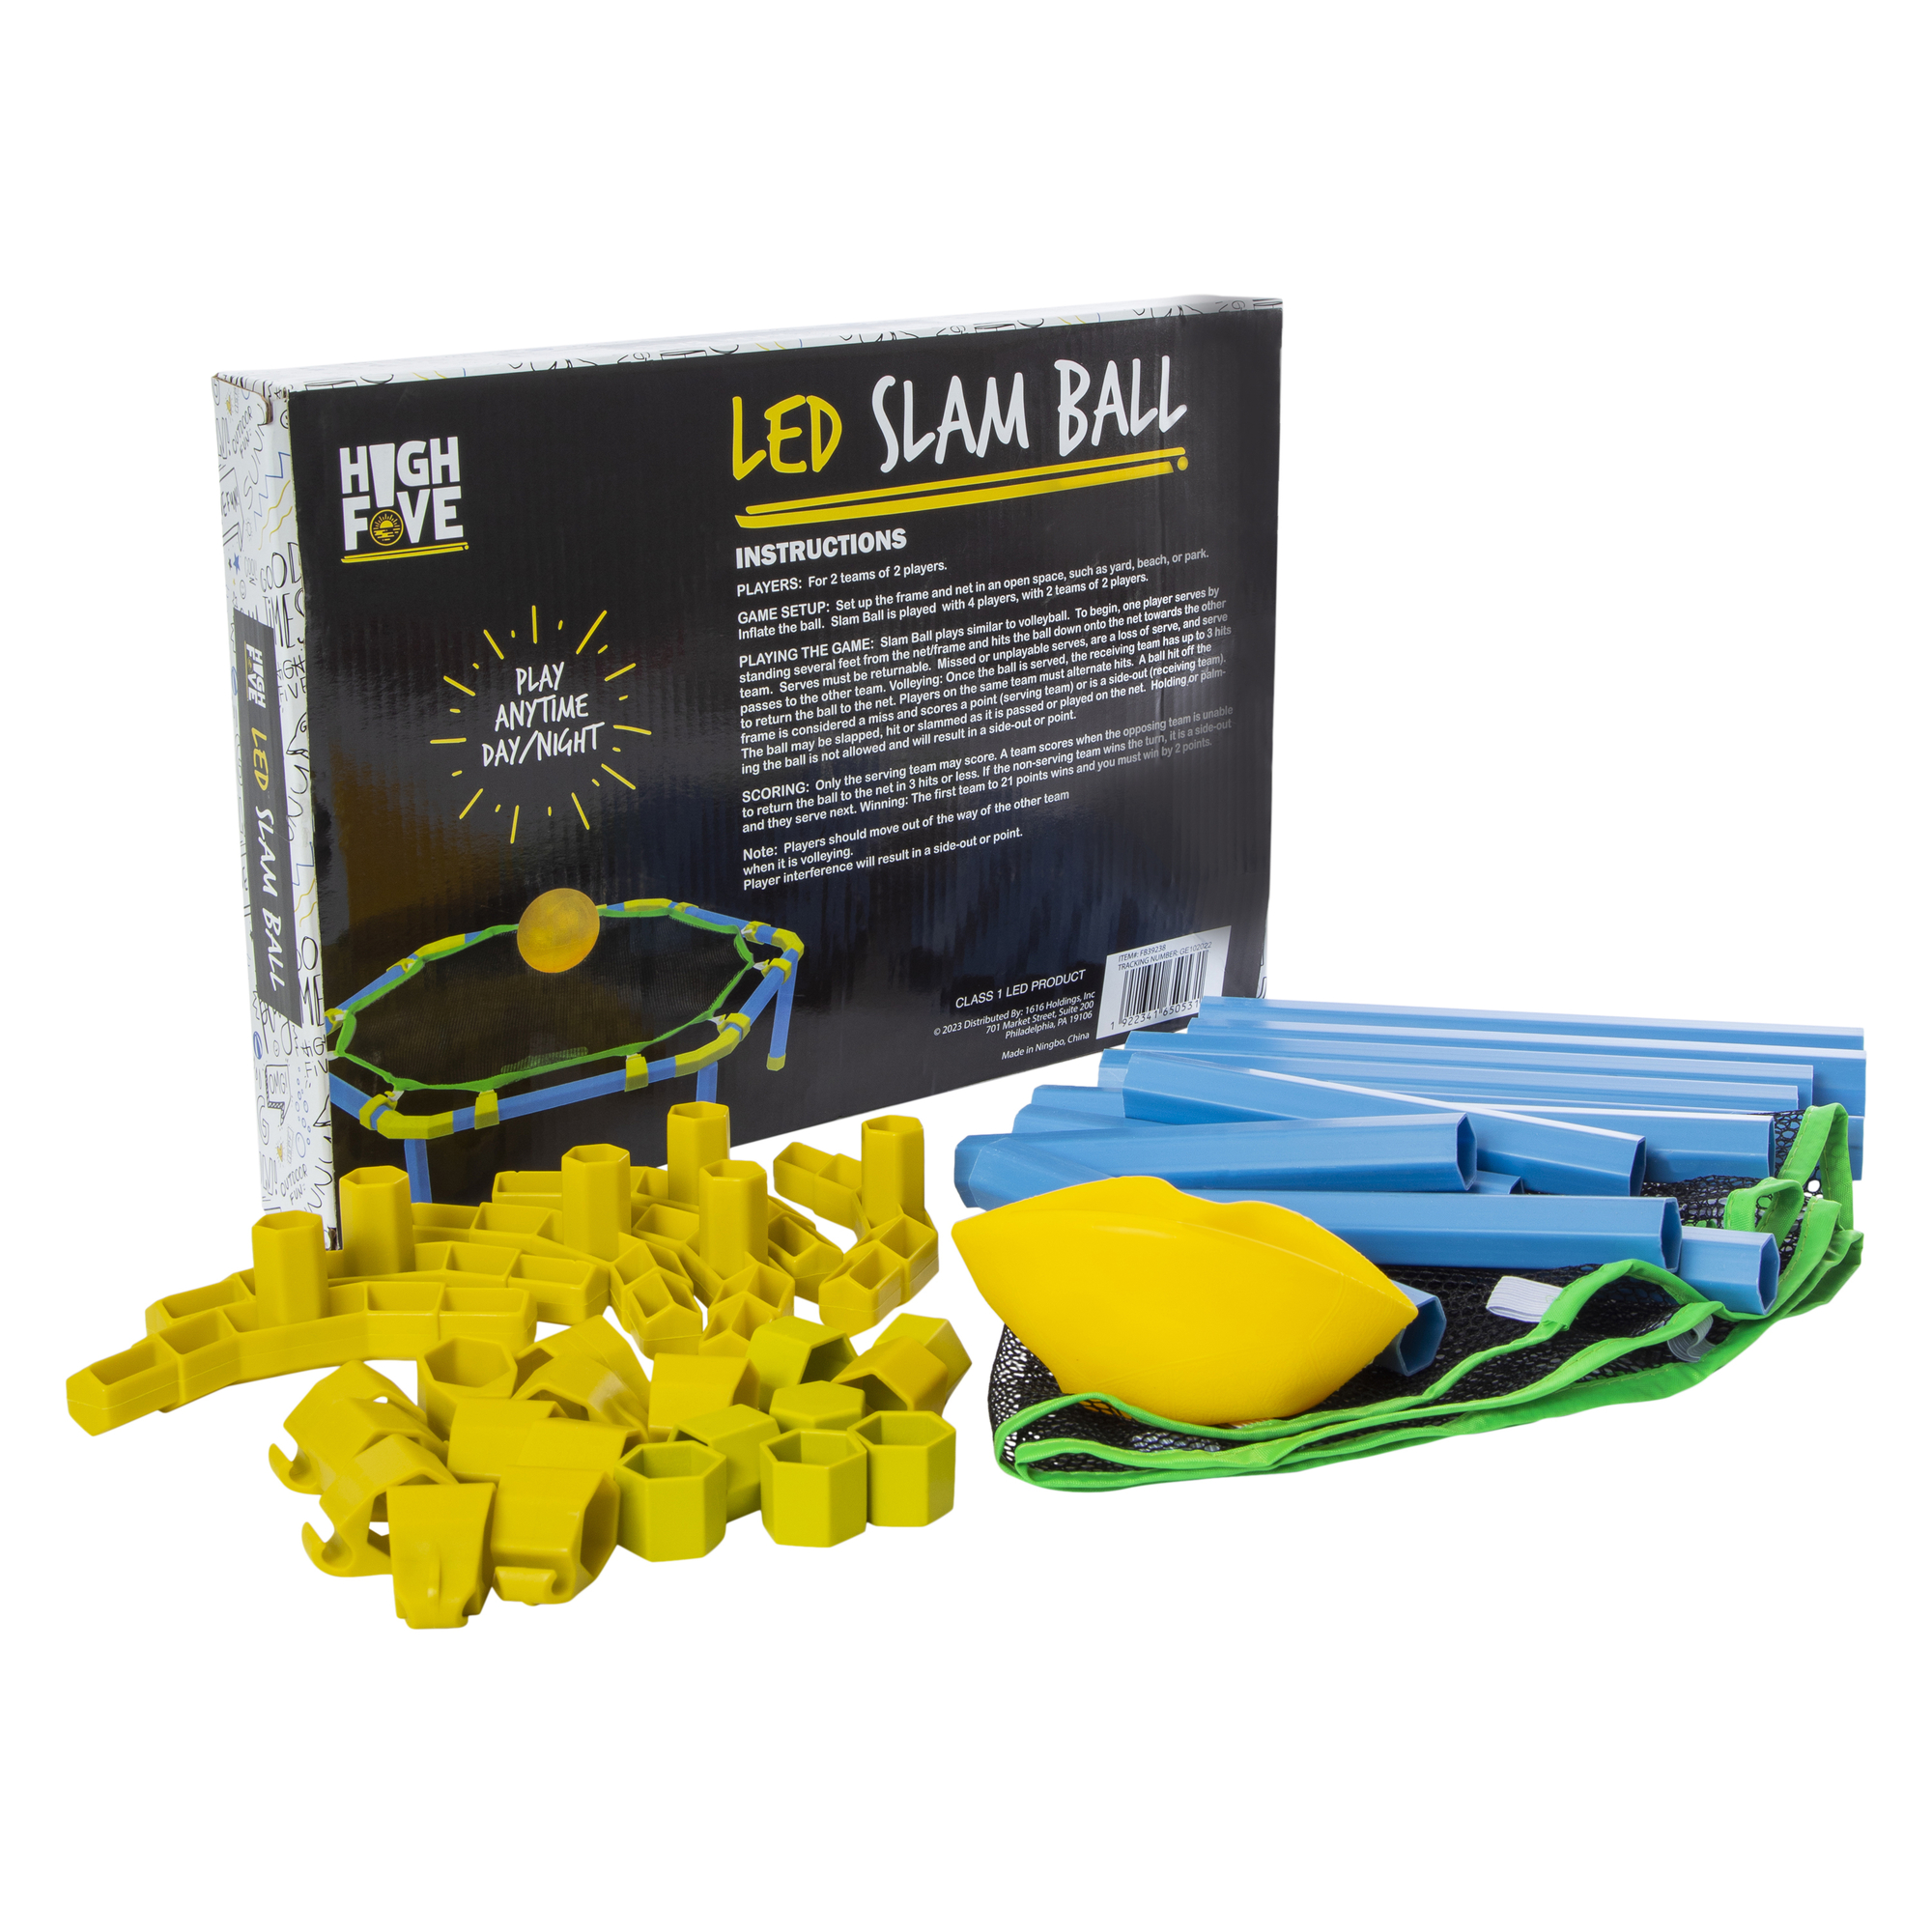 high five® LED slam ball game